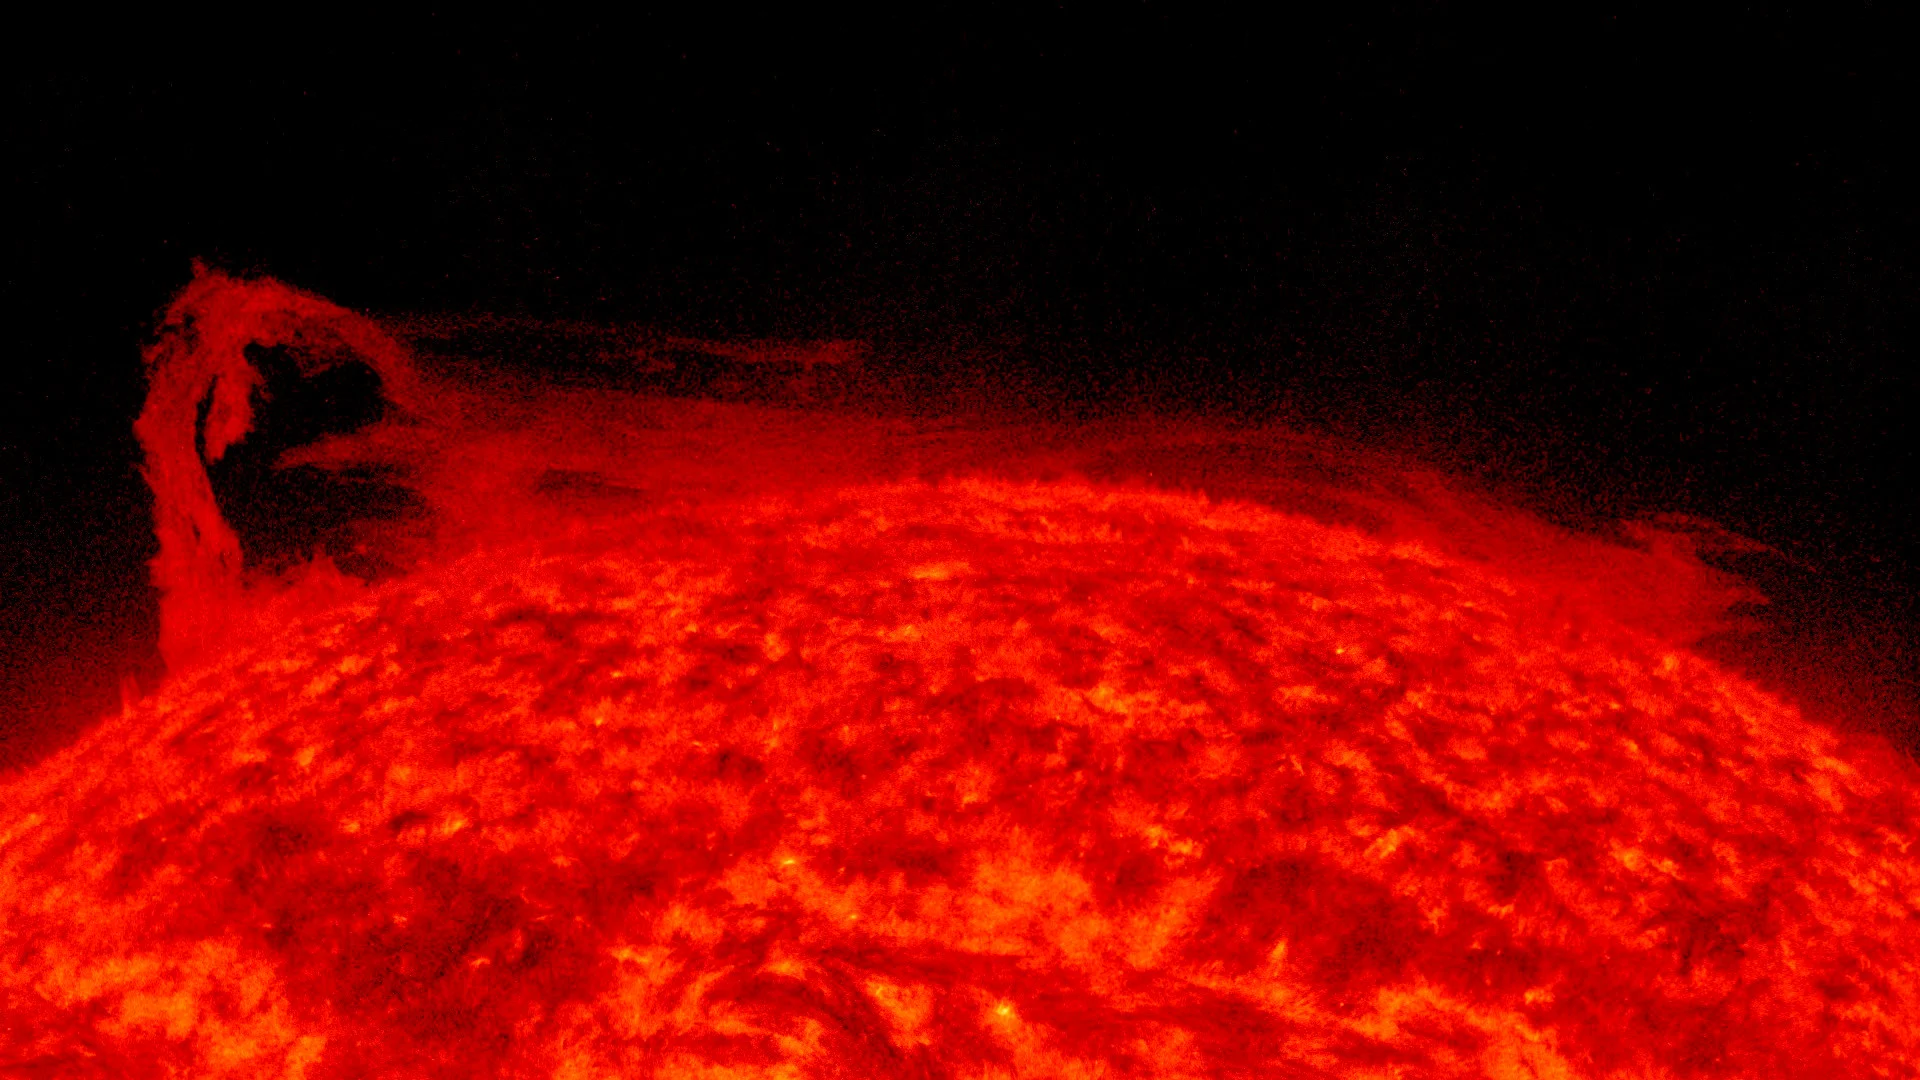 Massive filament swirls into a 'polar vortex' on the Sun, wowing scientists